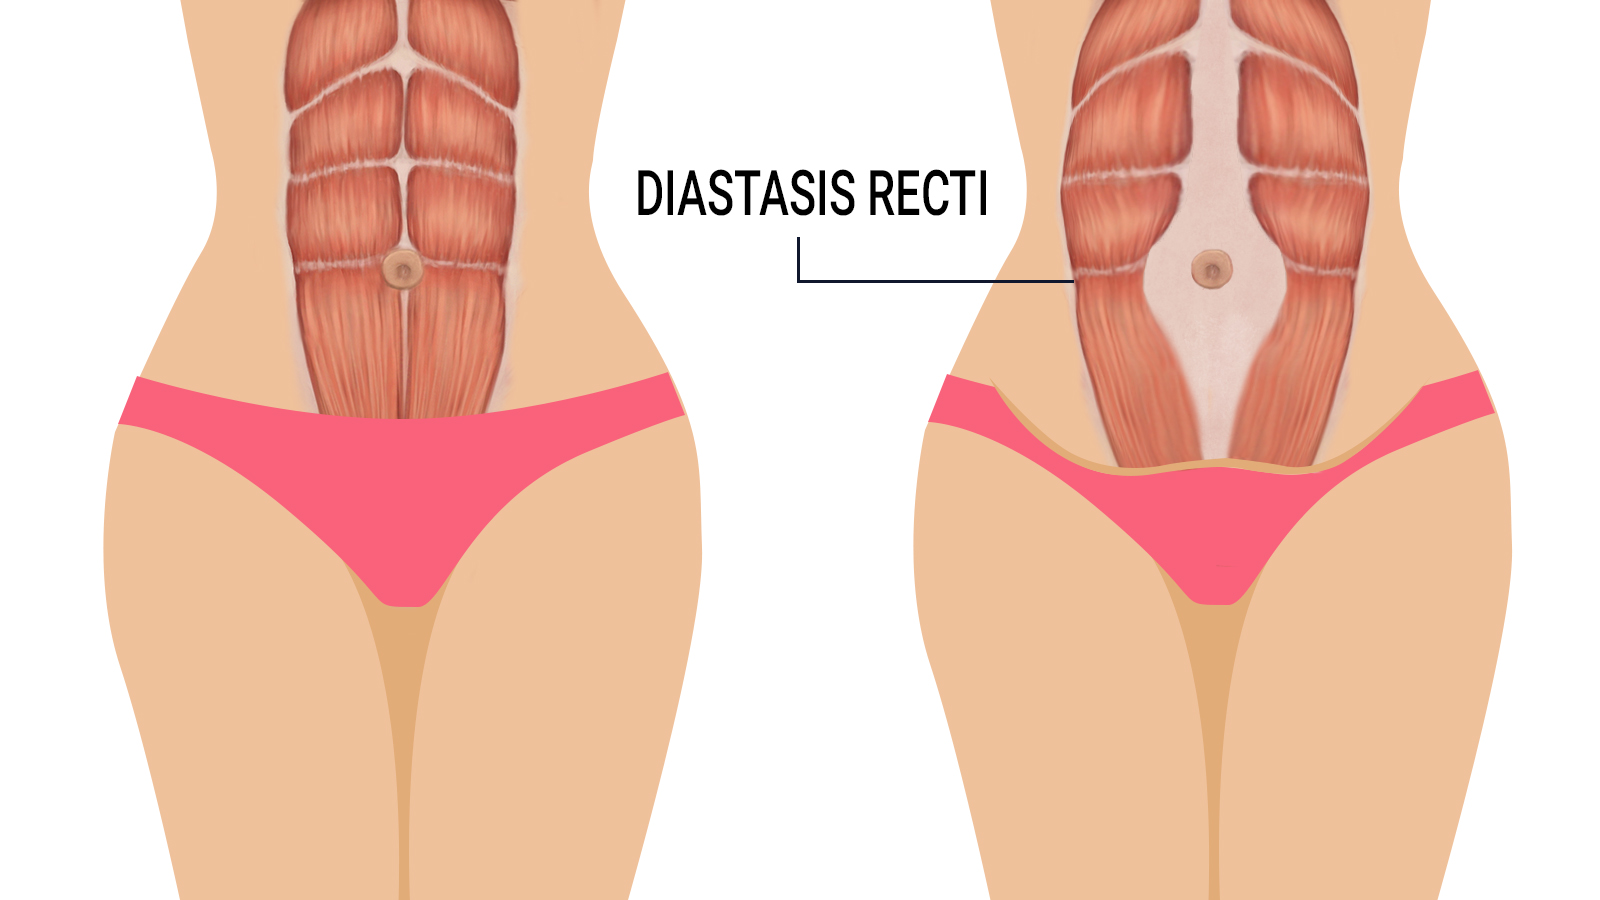 Abdominal separation (diastasis recti) during pregnancy